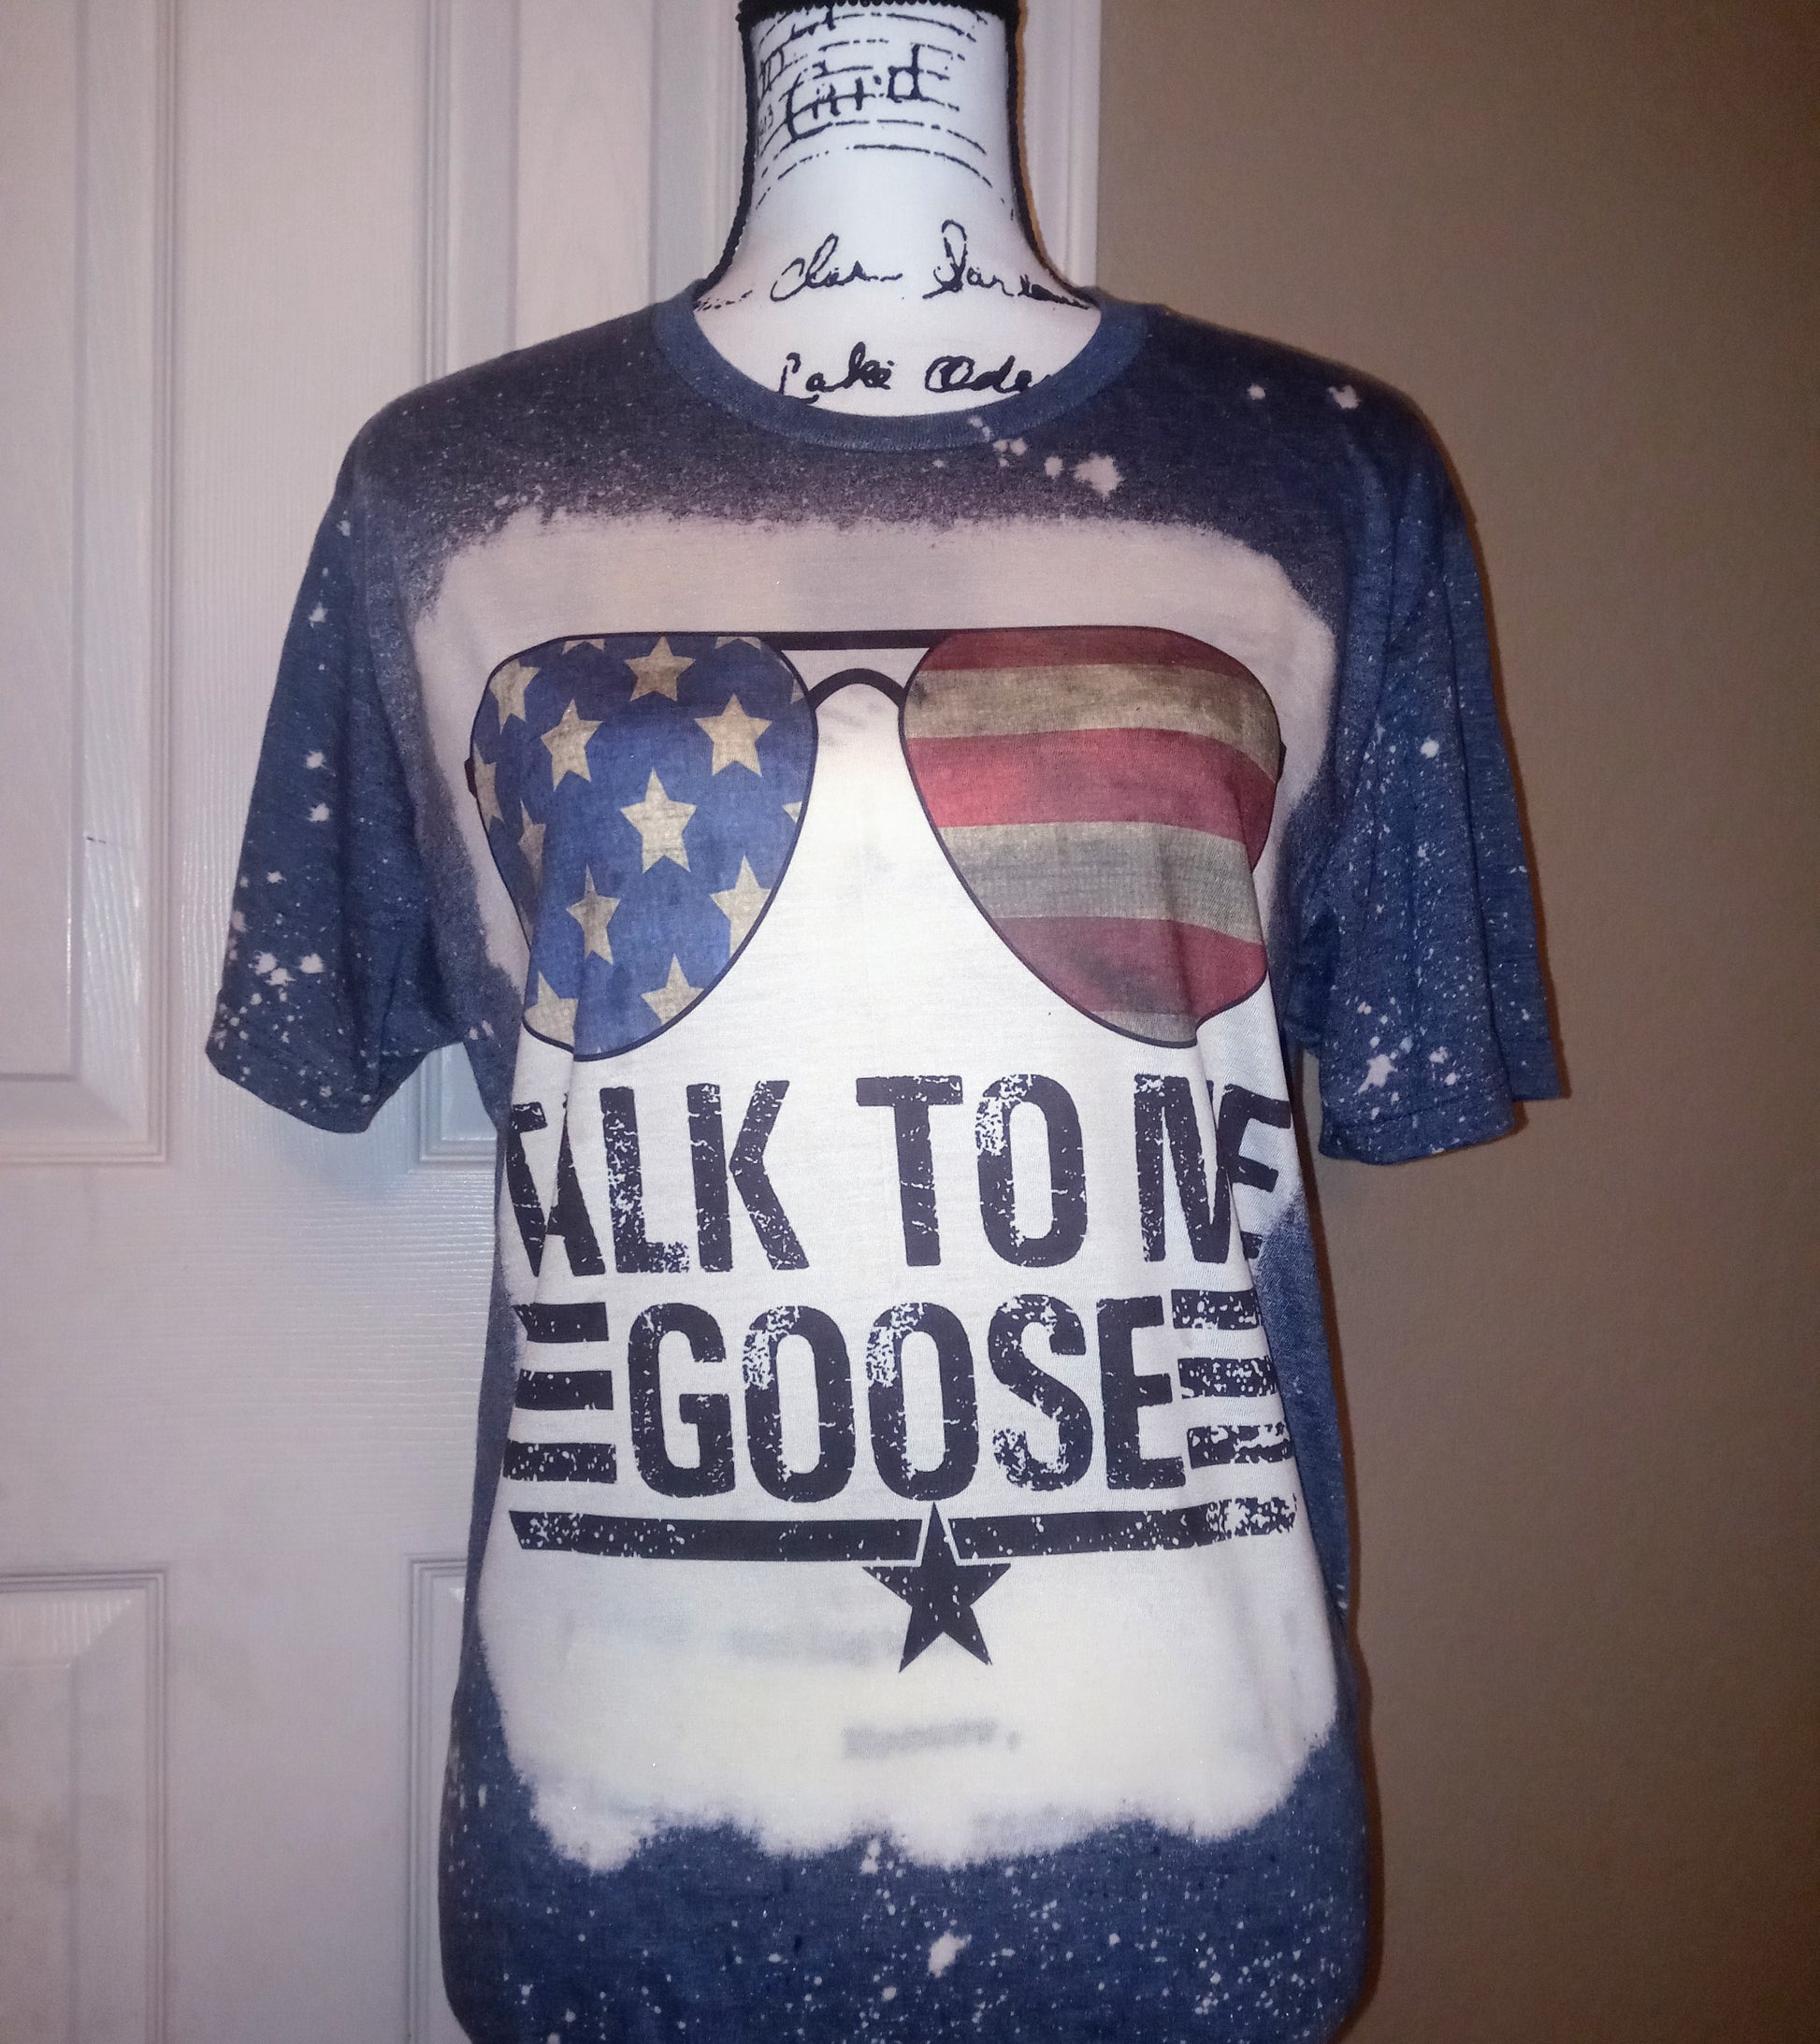 Talk to me goose U.S. flag glasses bleached shirt - Mayan Sub Shop